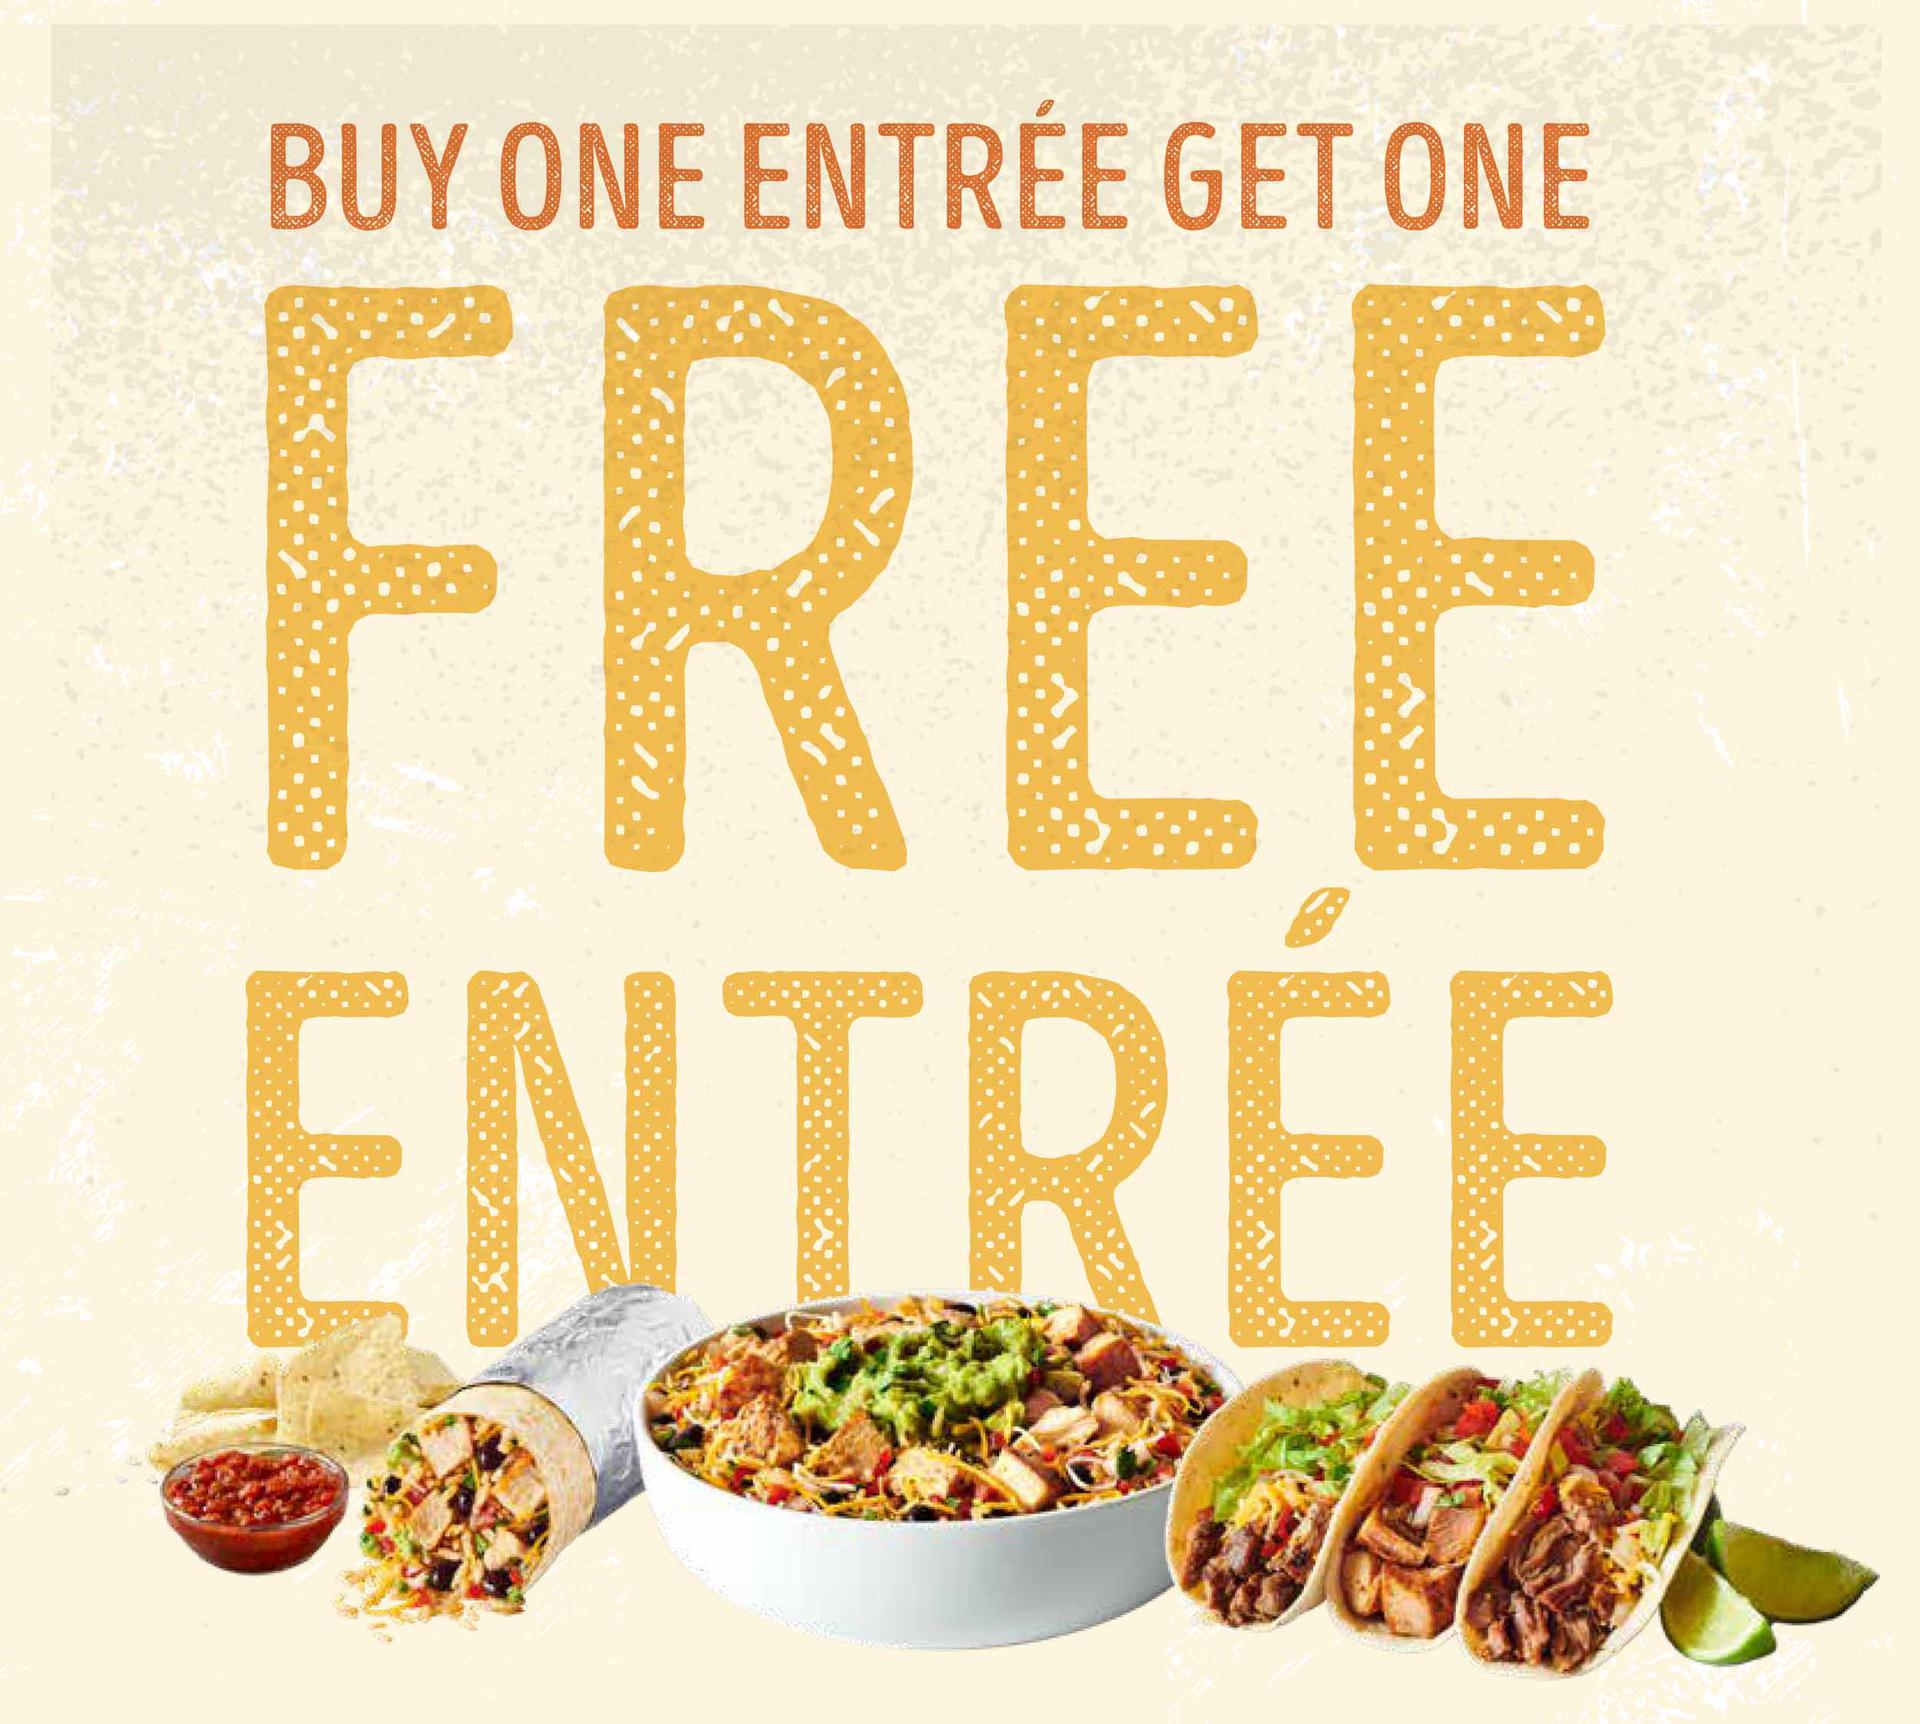 Moe's Southwest Grill Rewards: Buy 1, Get 1 Free Adult Entrees (Valid 9/28 - 9/29)